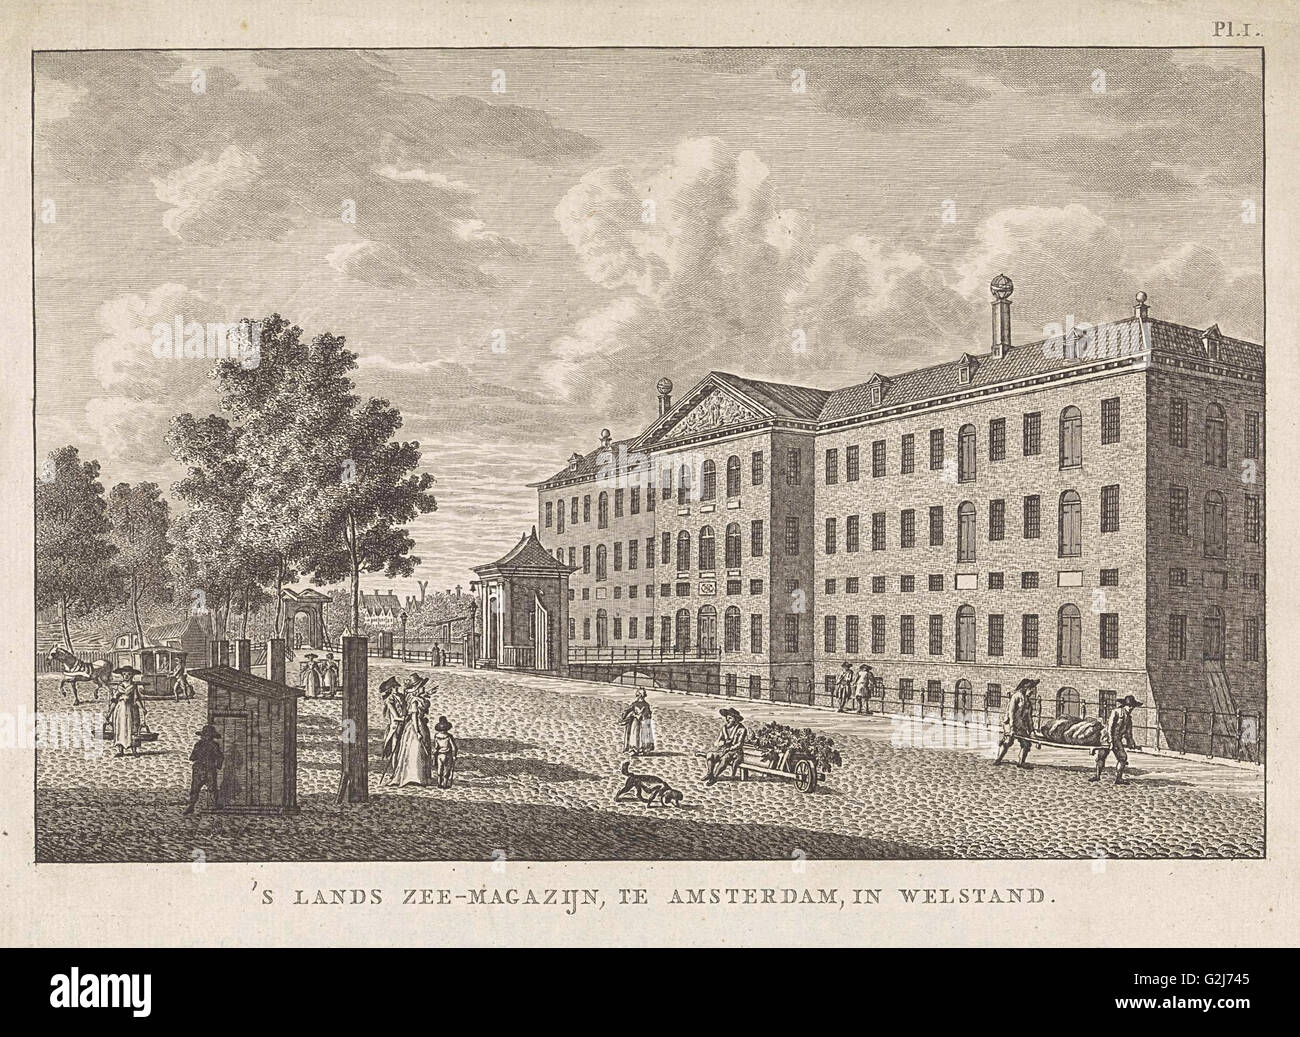 s Lands Zeemagazijn in Amsterdam, vor dem 1791 Brand, den Niederlanden, anonym, Jan Bulthuis, 1791 Stockfoto